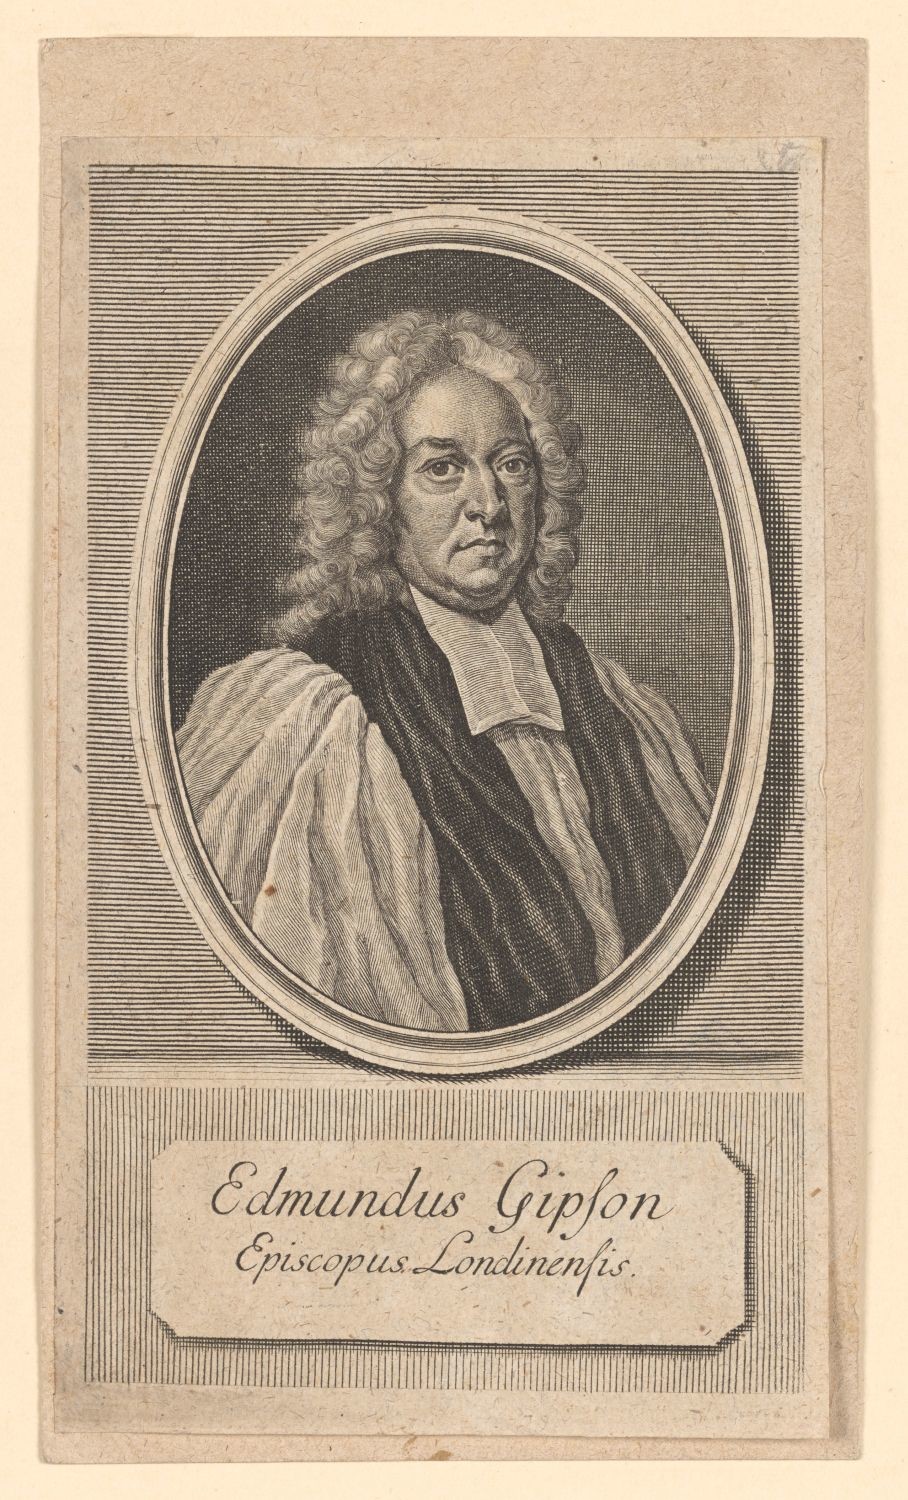 Porträt Edmund Gibson (1669-1748) (Stiftung Händelhaus, Halle CC BY-NC-SA)